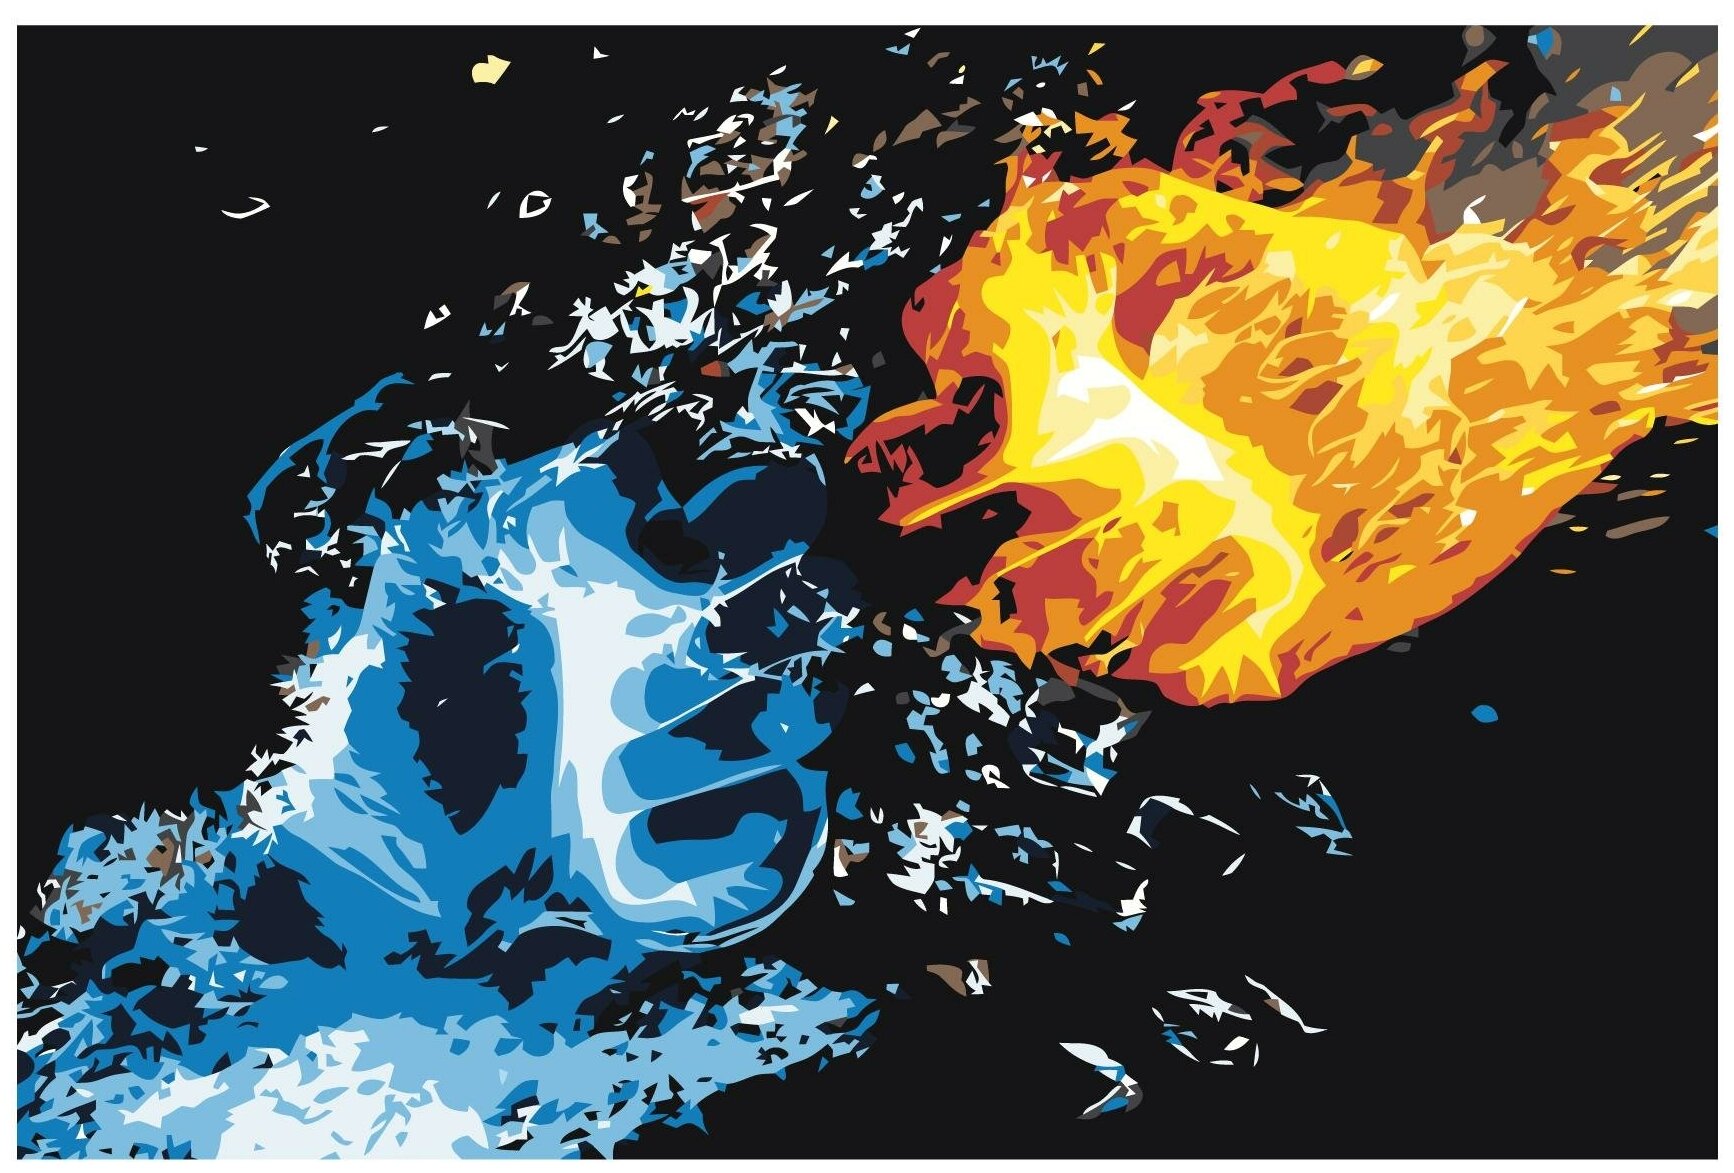 Картина по номерам, "Живопись по номерам", 40 x 60, FT06, Огонь, вода, абстракция, руки, кулак, битва